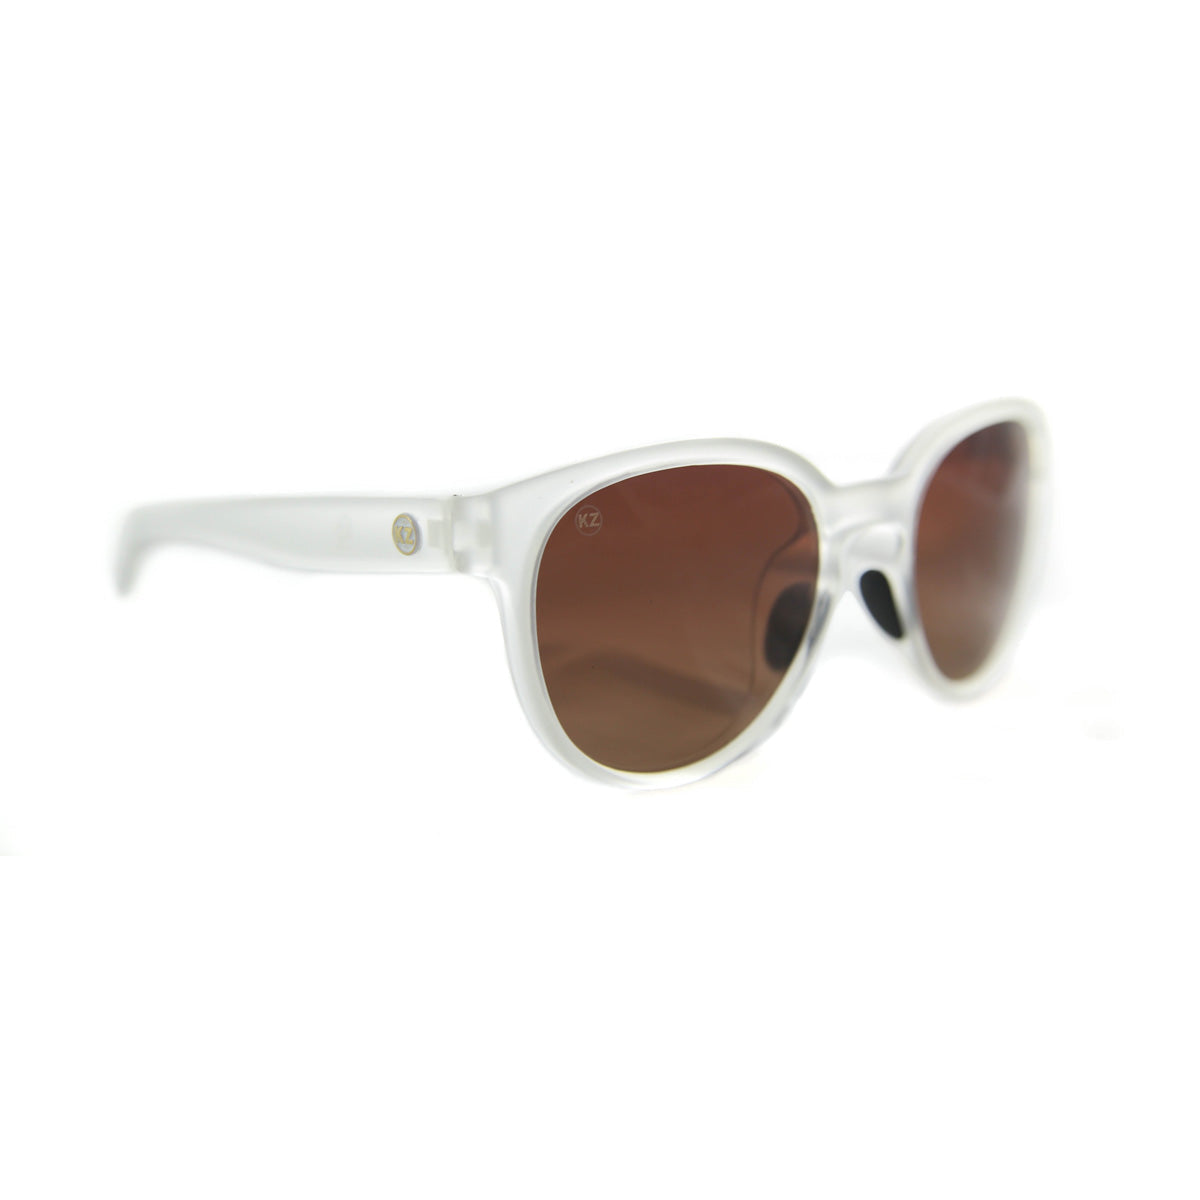 Oasis - Floating Sunglasses